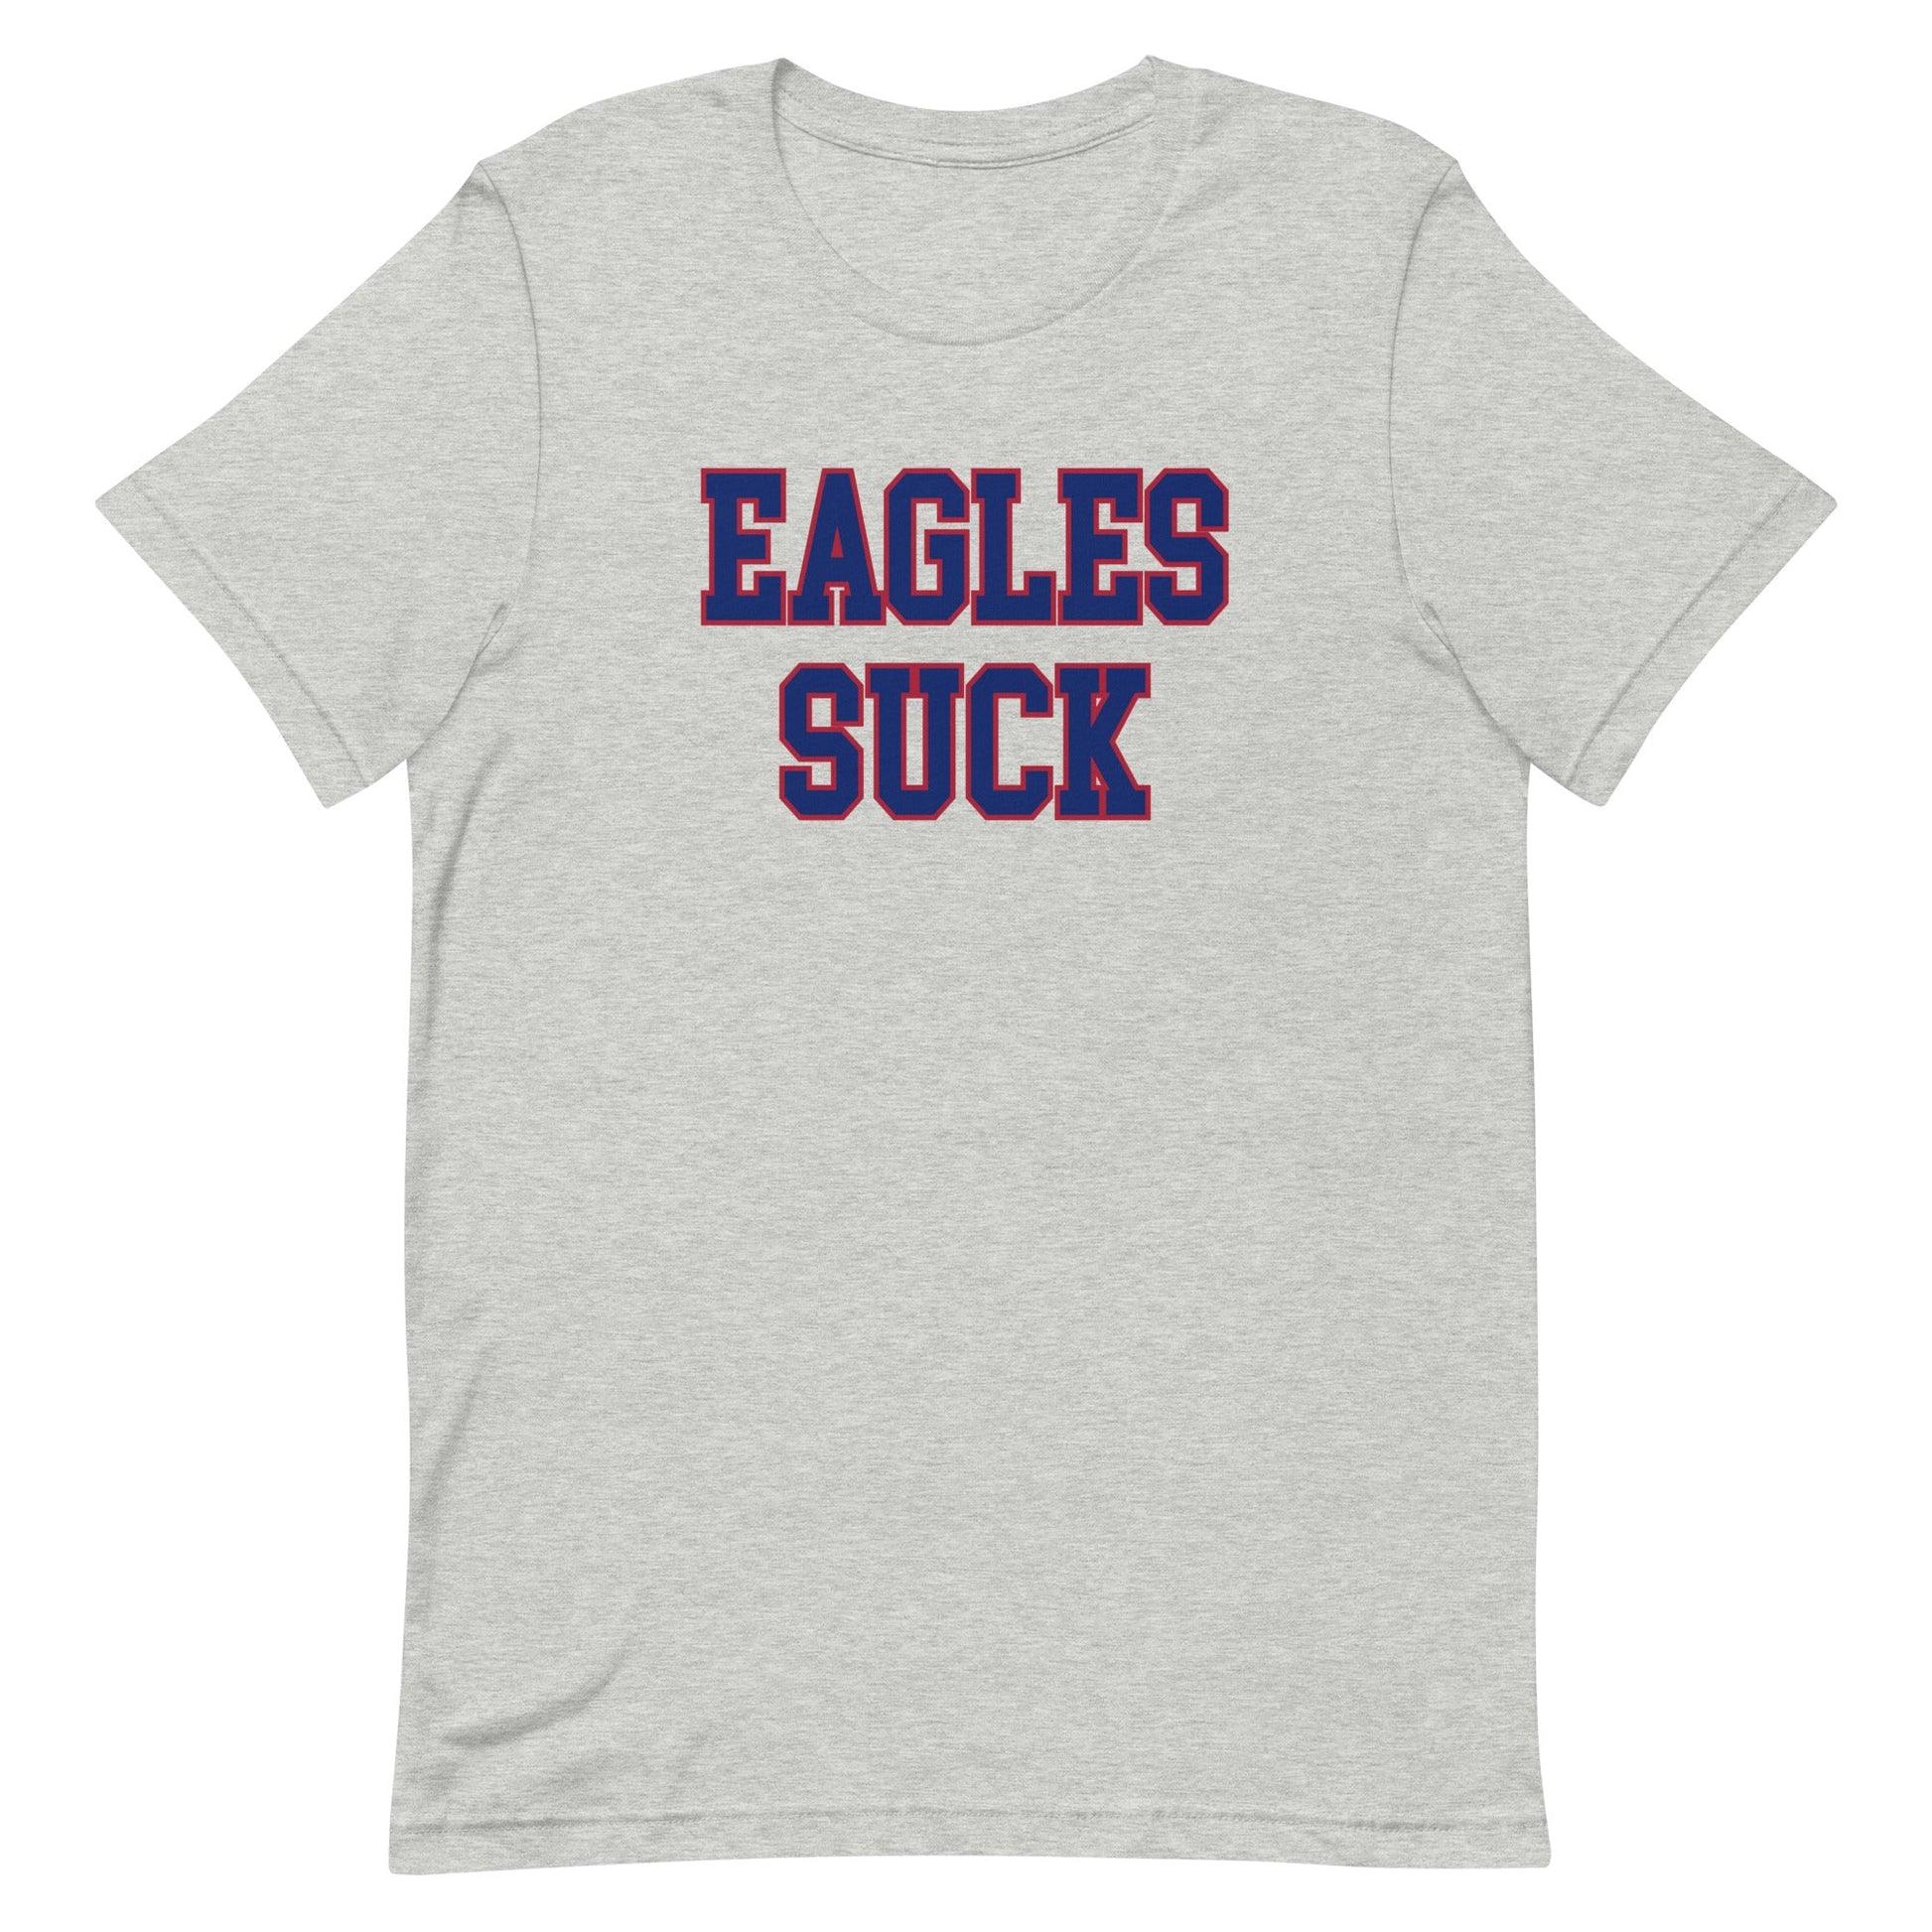 Eagles Suck Shirt - Giants Rivalry Shirt